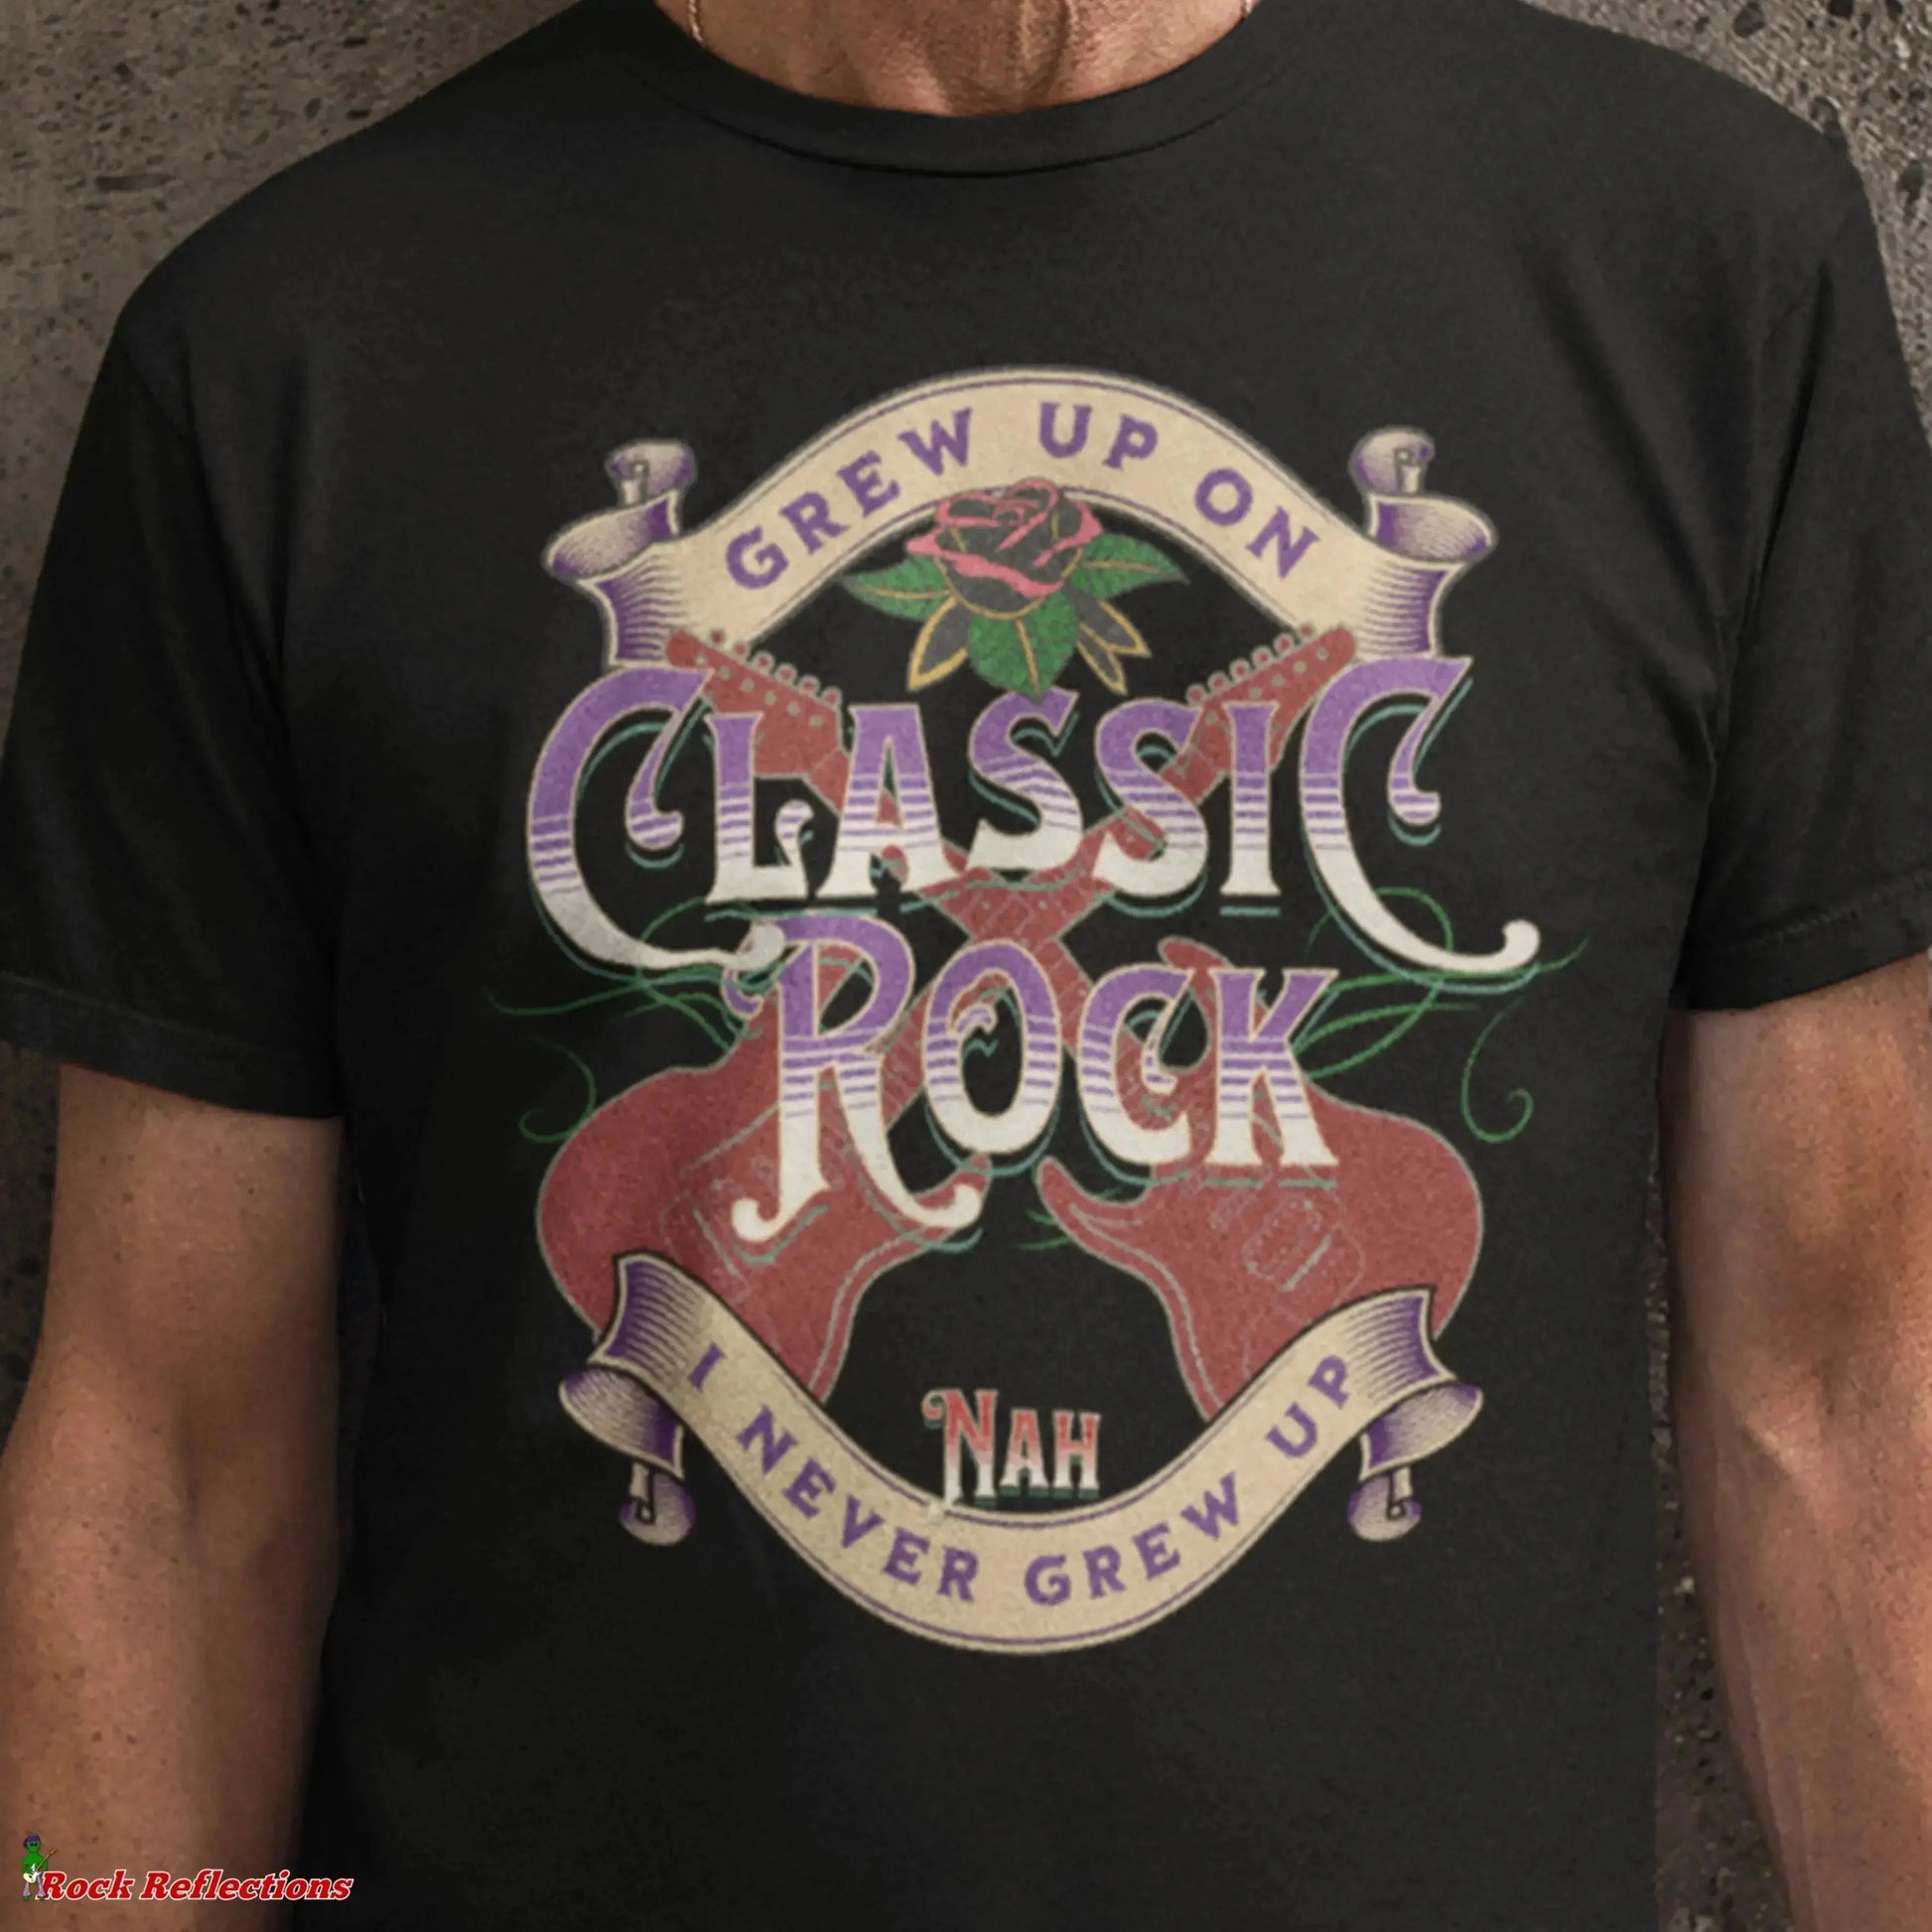 Grew Up On Classic Rock T-Shirt SPOD